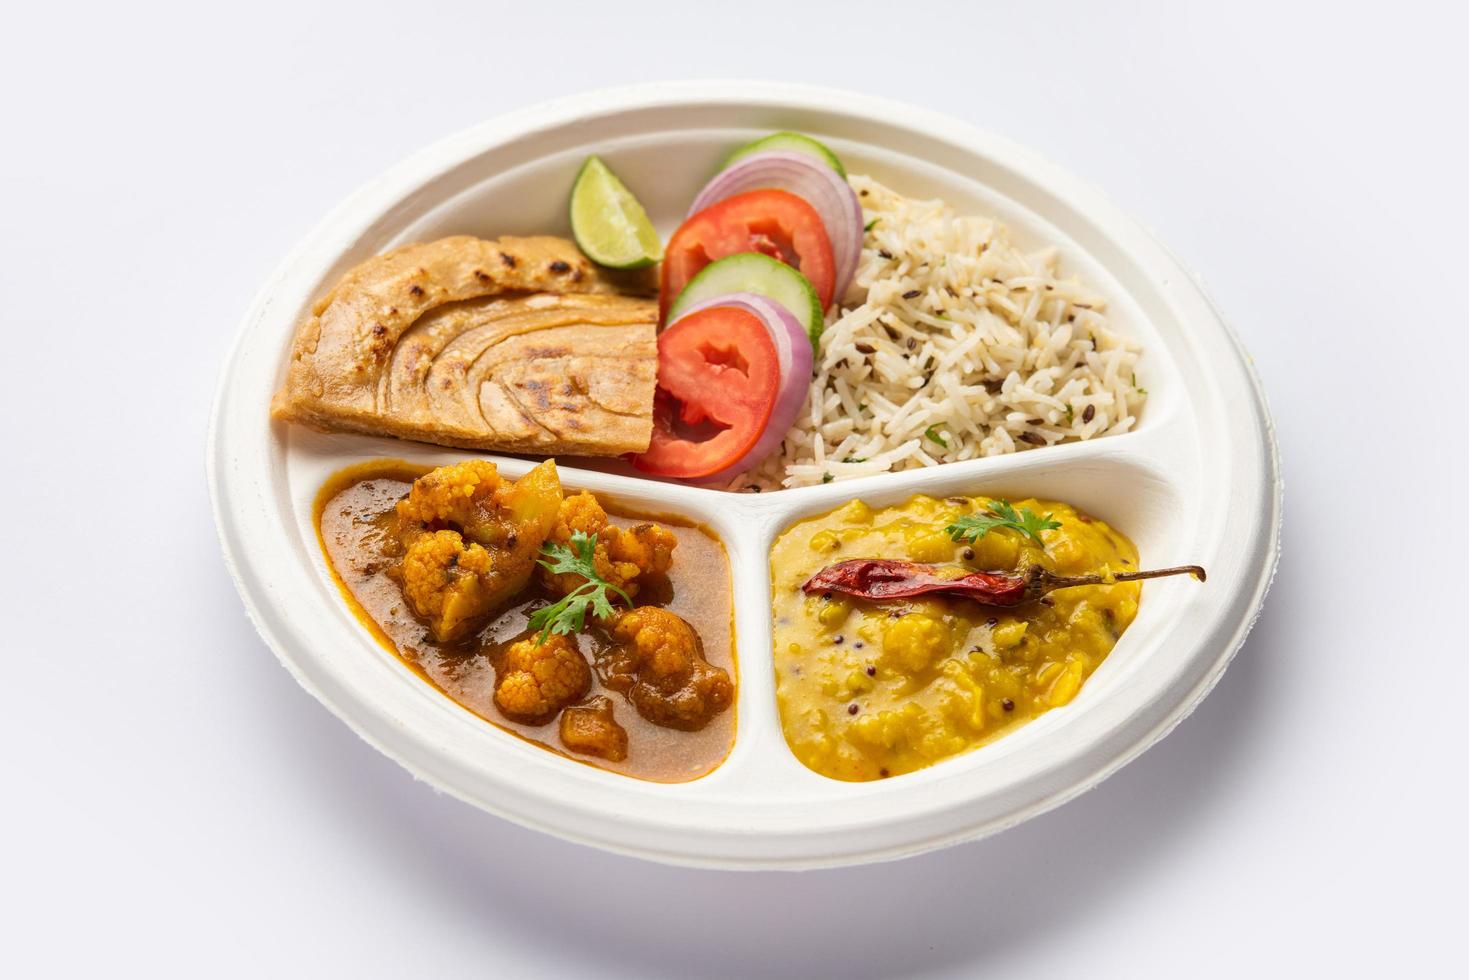 Indian mini meal parcel platter or combo thali with Gobi Masala, roti, dal tarka, jeera rice, salad photo